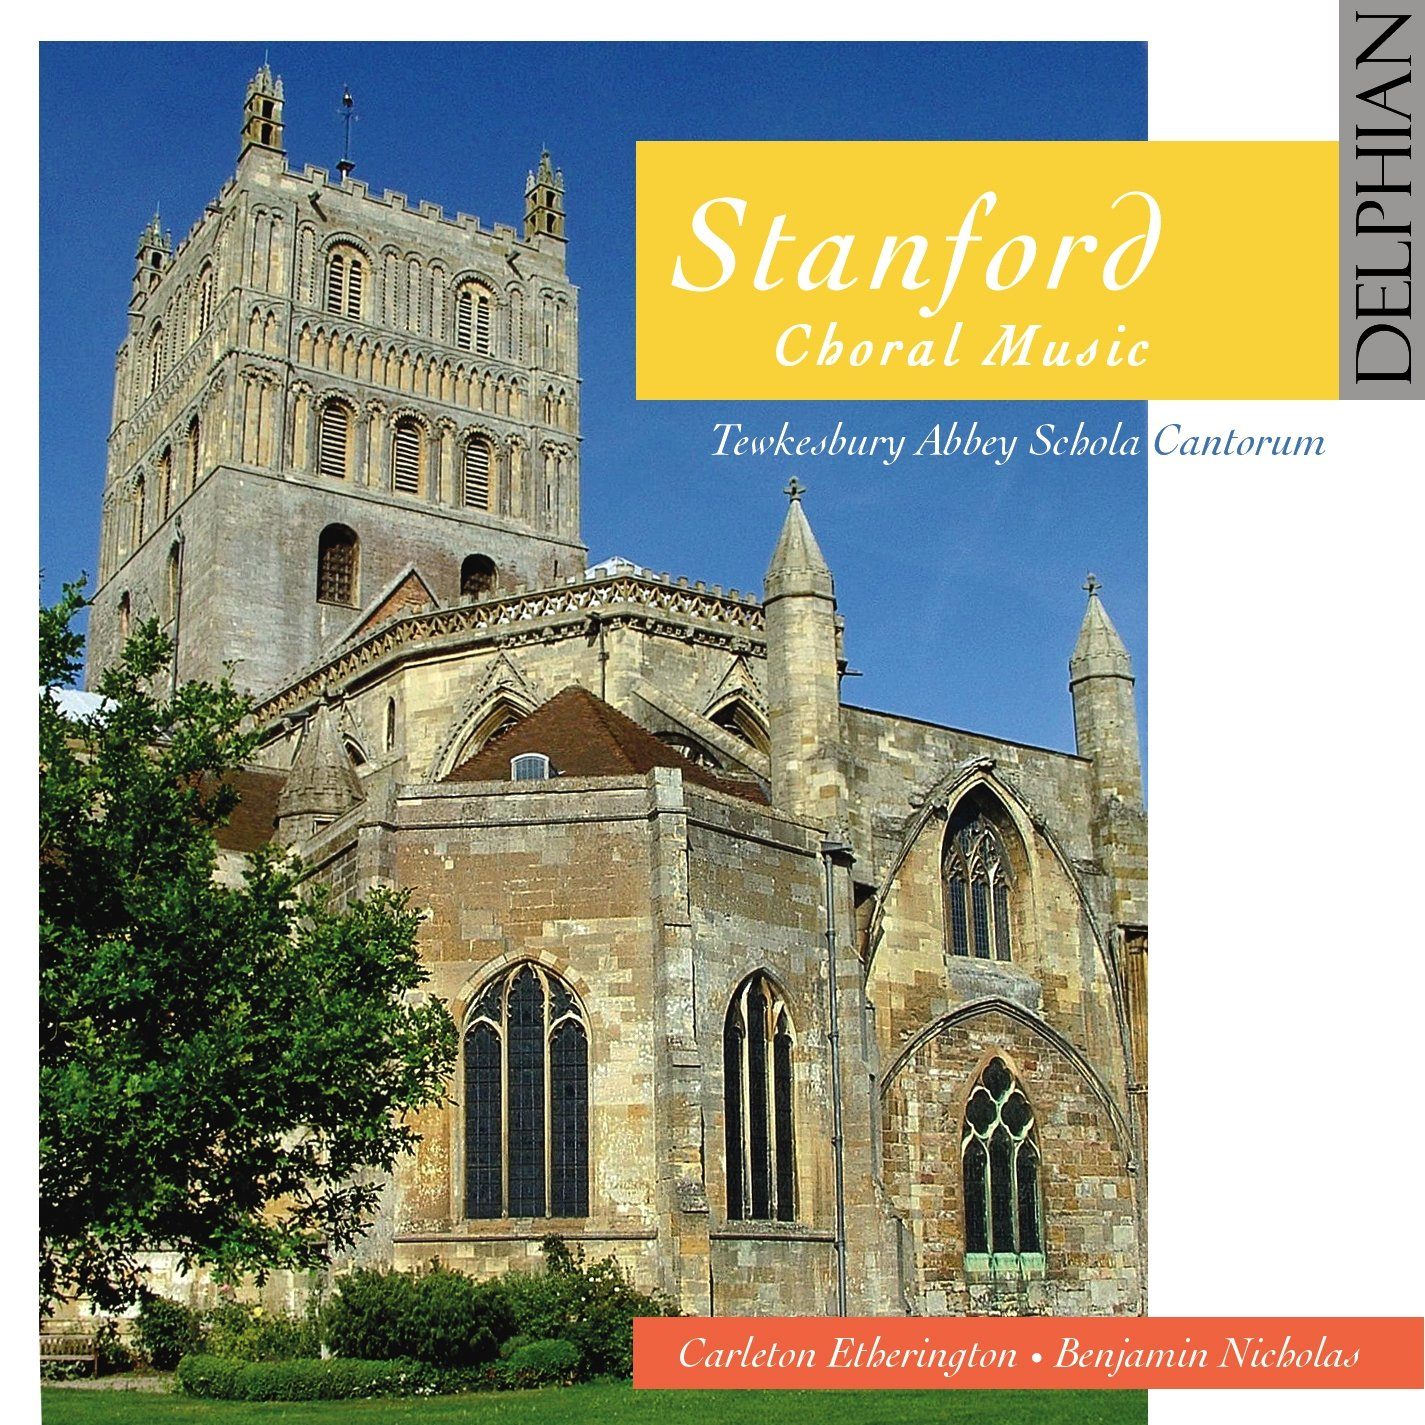 Stanford: Choral Music CD Delphian Records